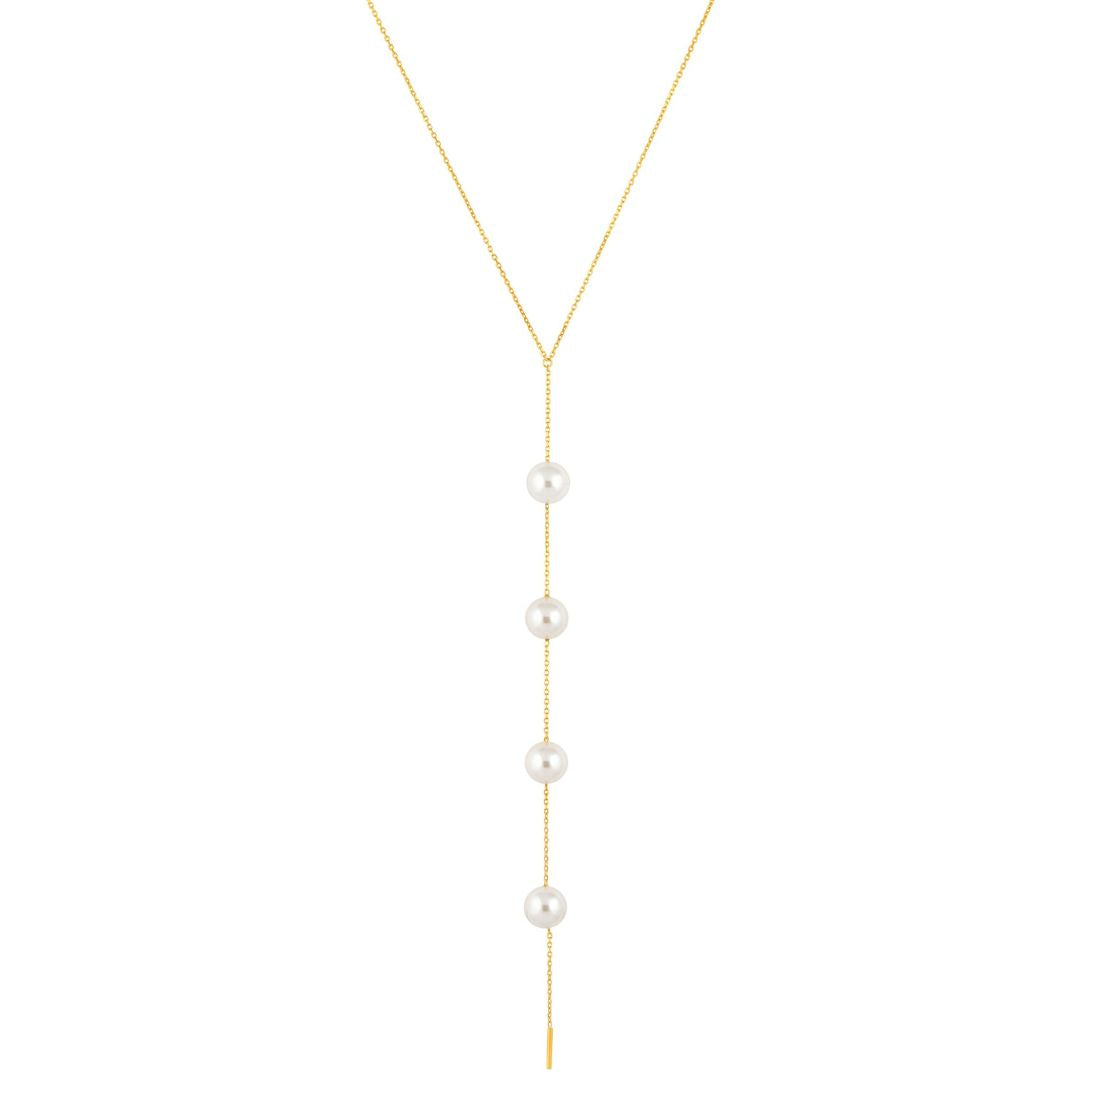 Quadruple Pearl Lariat Necklace on display